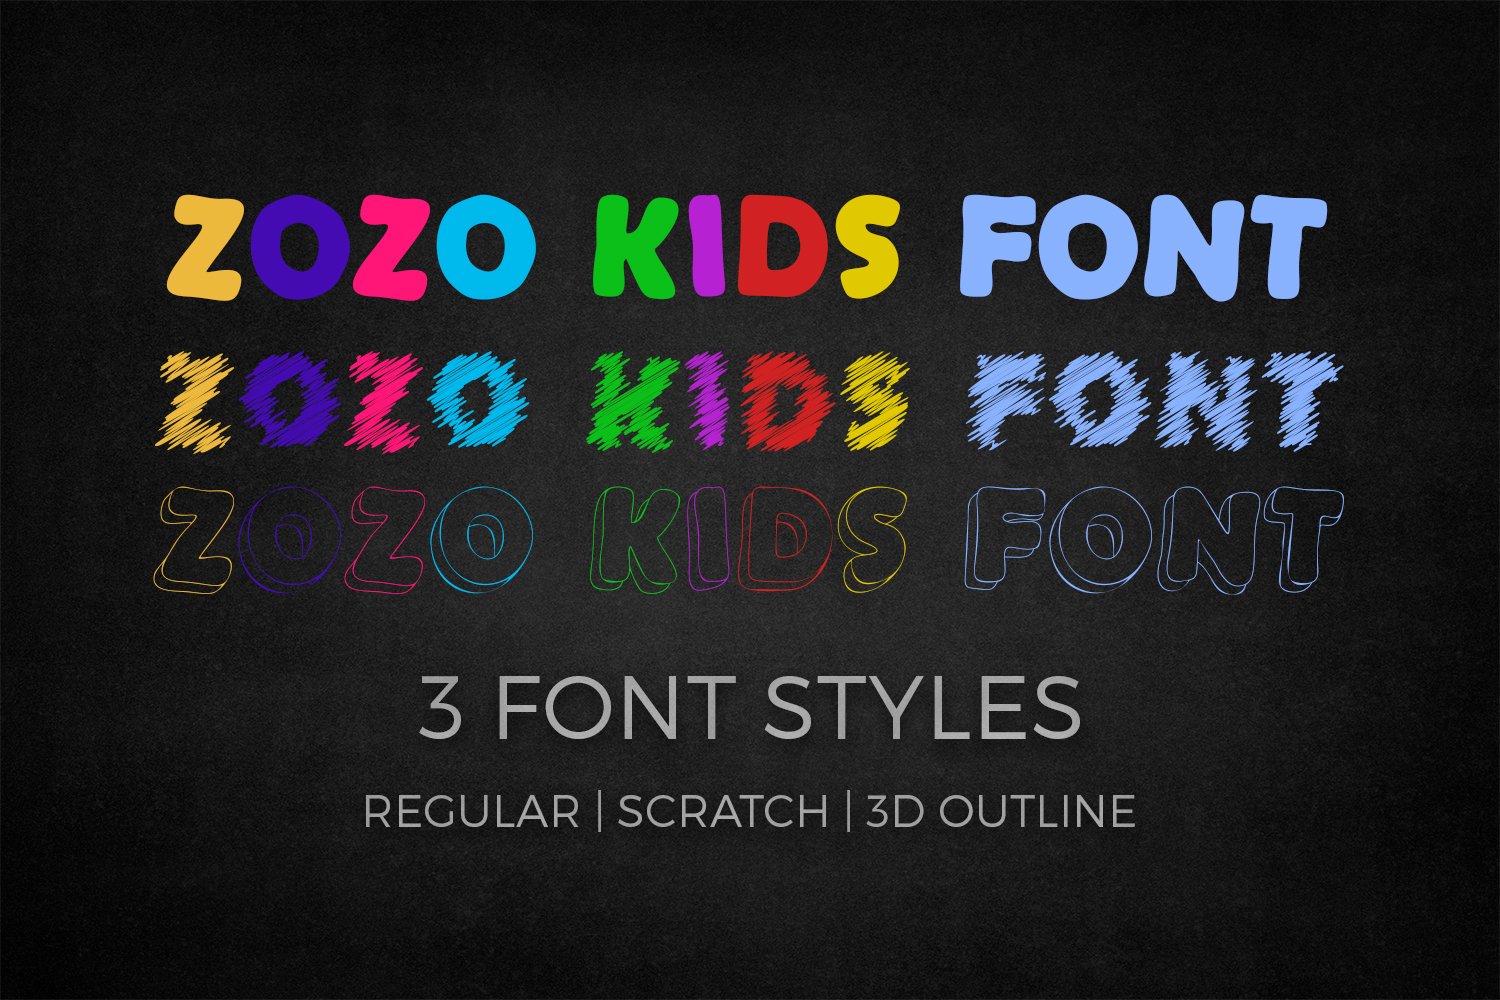 ZoZo Kids Font cover image.